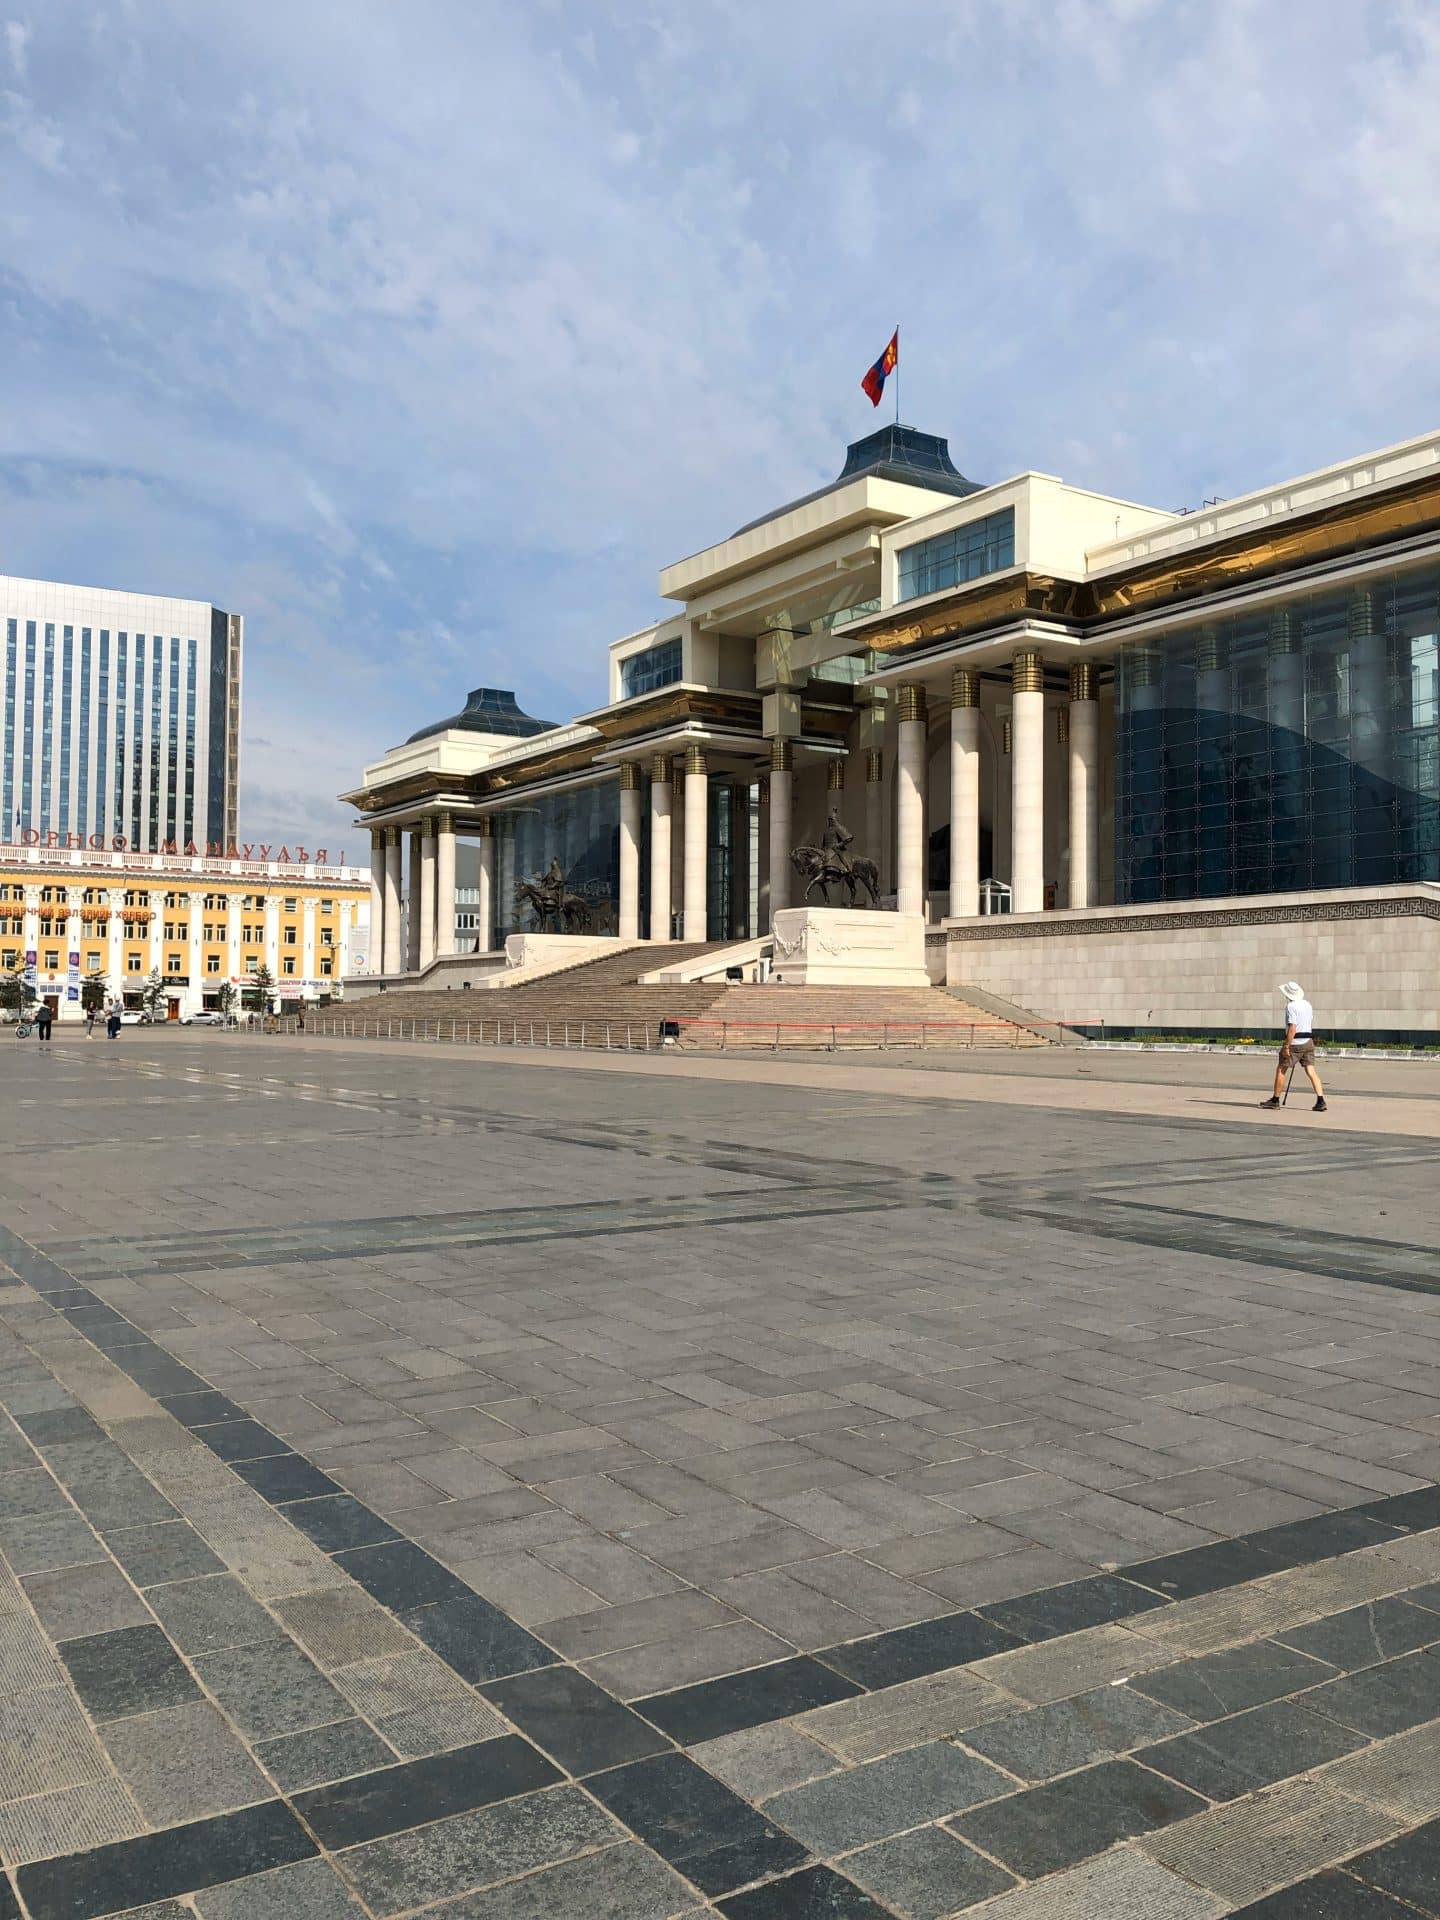 Bogd Khaan Palace Museum of Mongolia